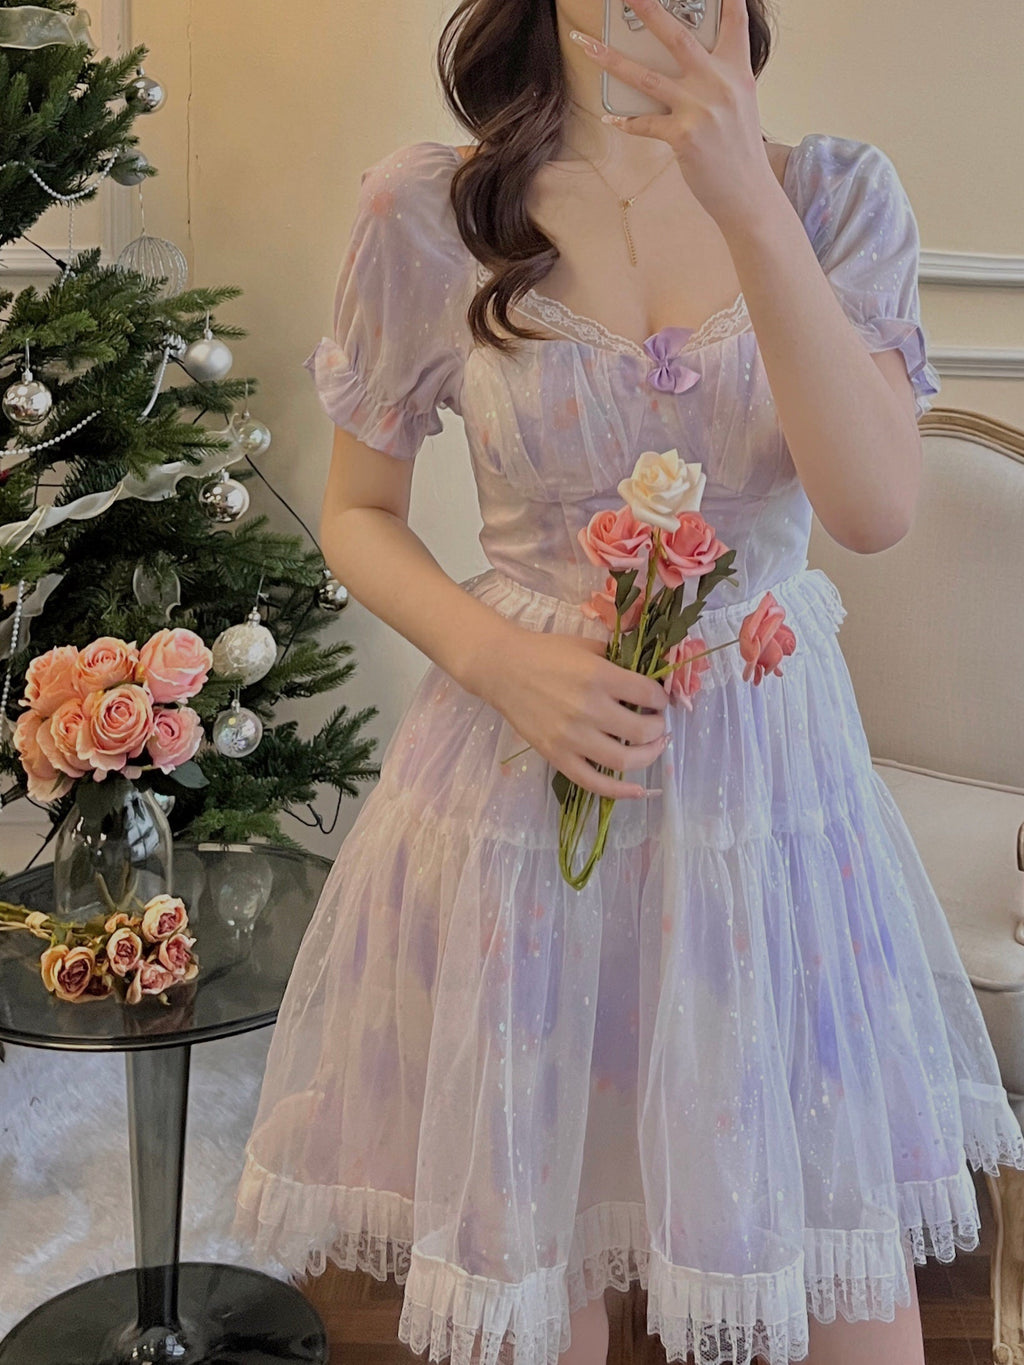 Kawaii Fashion, Kawaii Princess - Kawaii Pastel Aesthetic Clothing